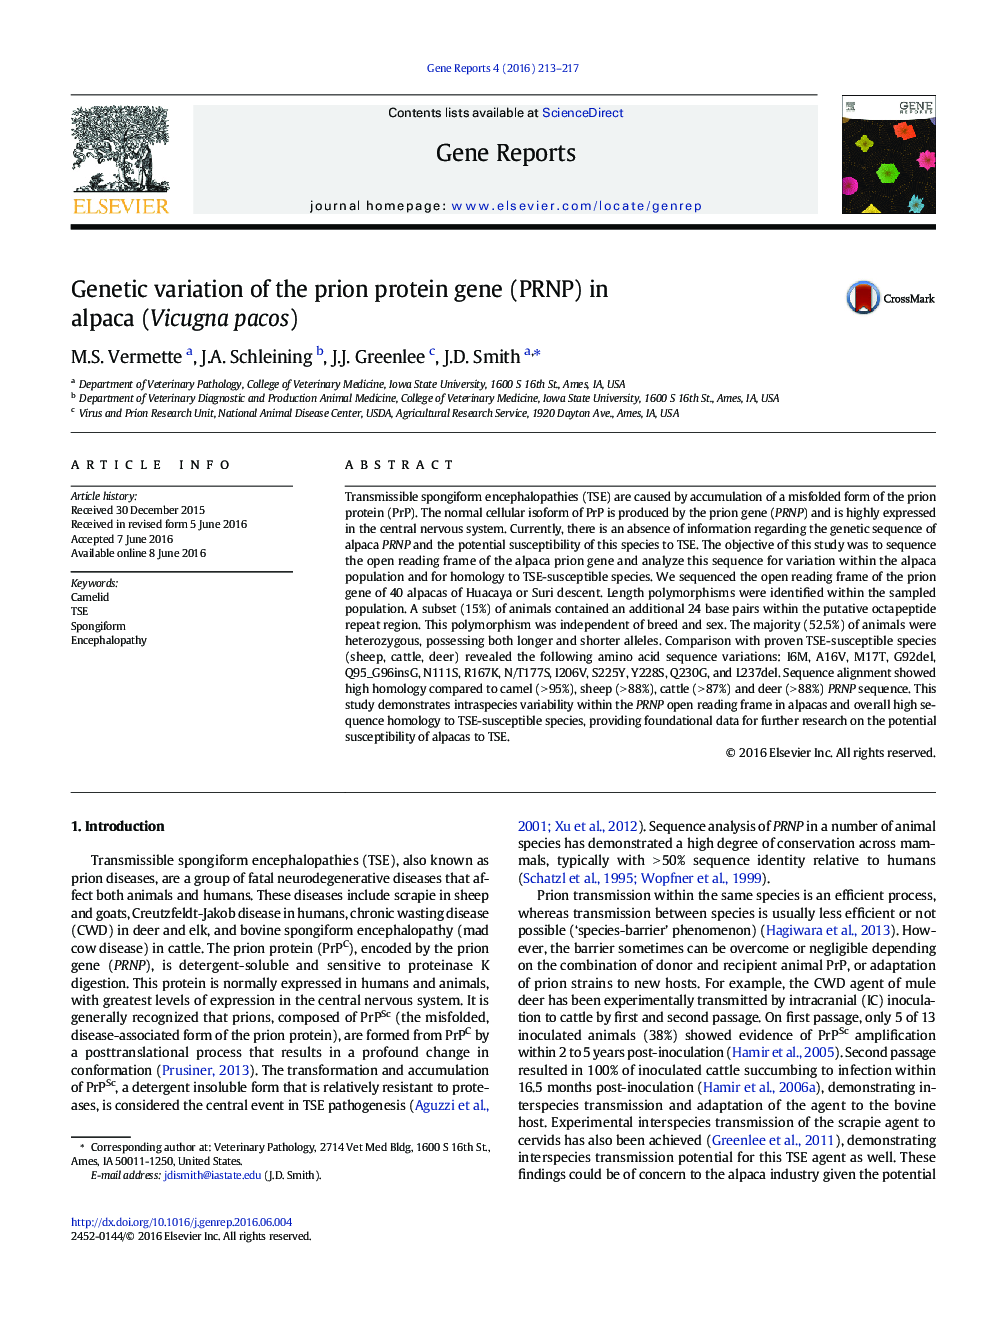 Genetic variation of the prion protein gene (PRNP) in alpaca (Vicugna pacos)